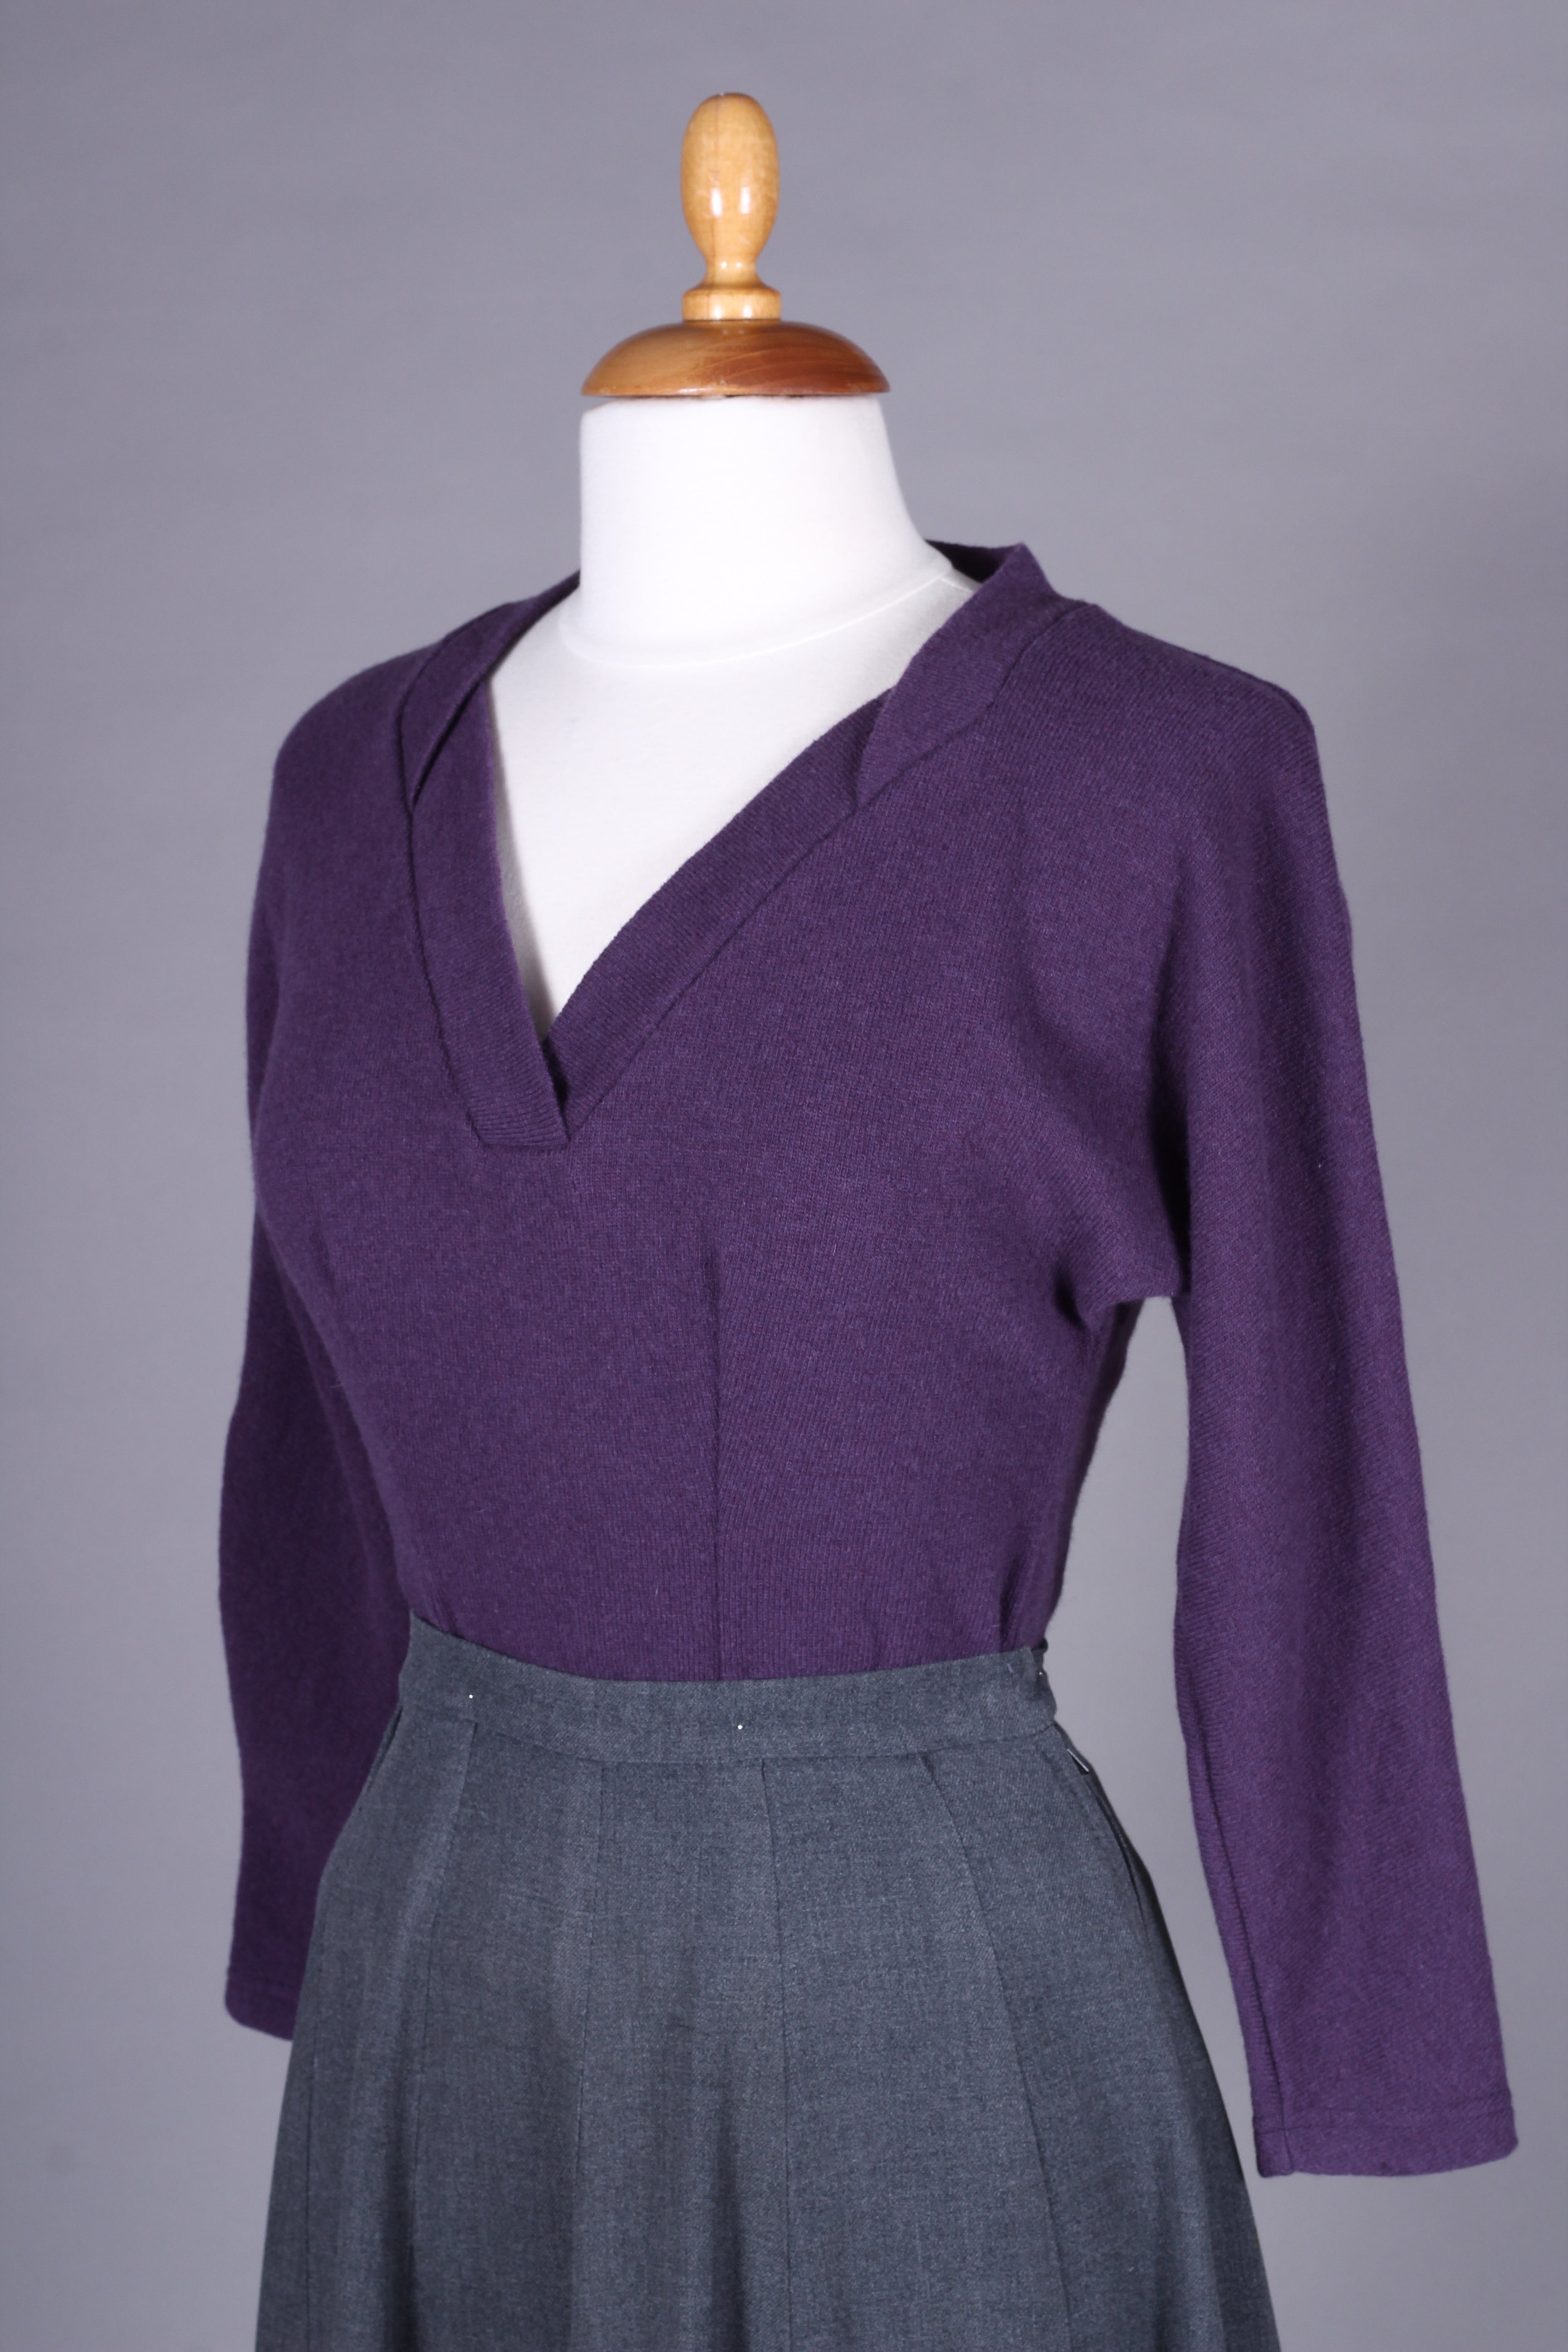 1950s vintage style pullover - Dark lavender - Elsa